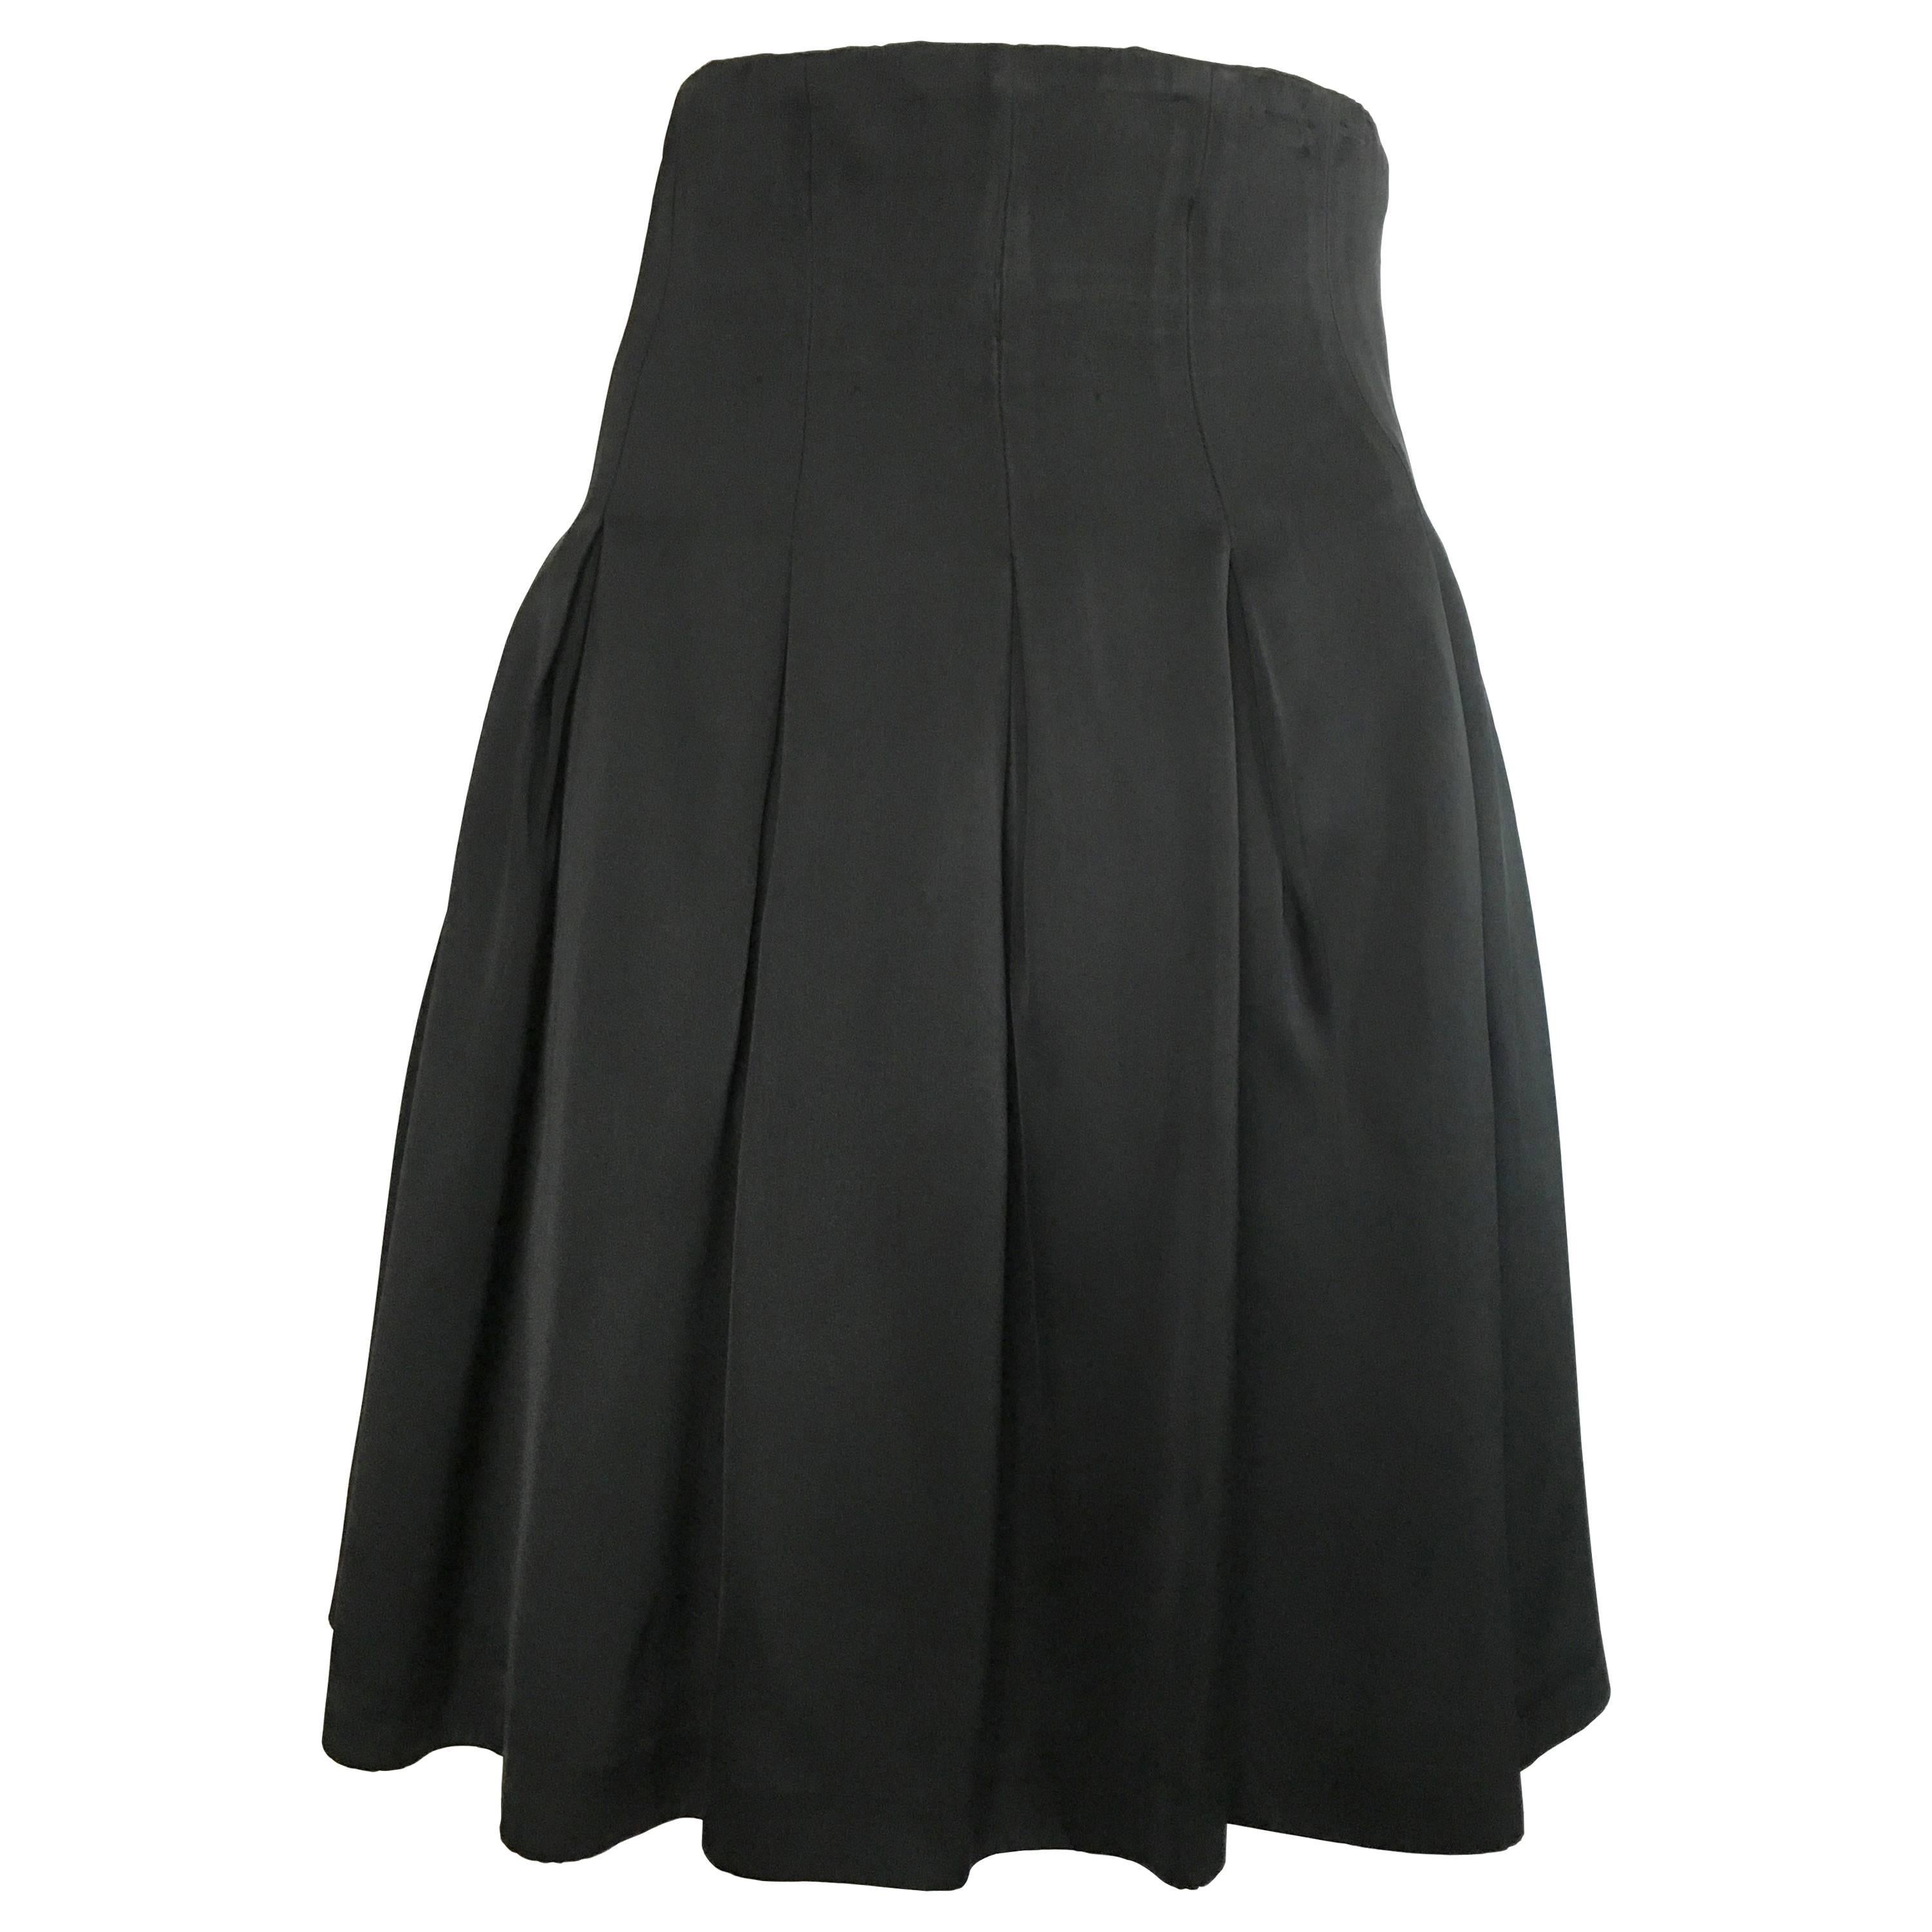 Patrick Kelly Paris 1980s Black Pleated Skirt Size 6. For Sale